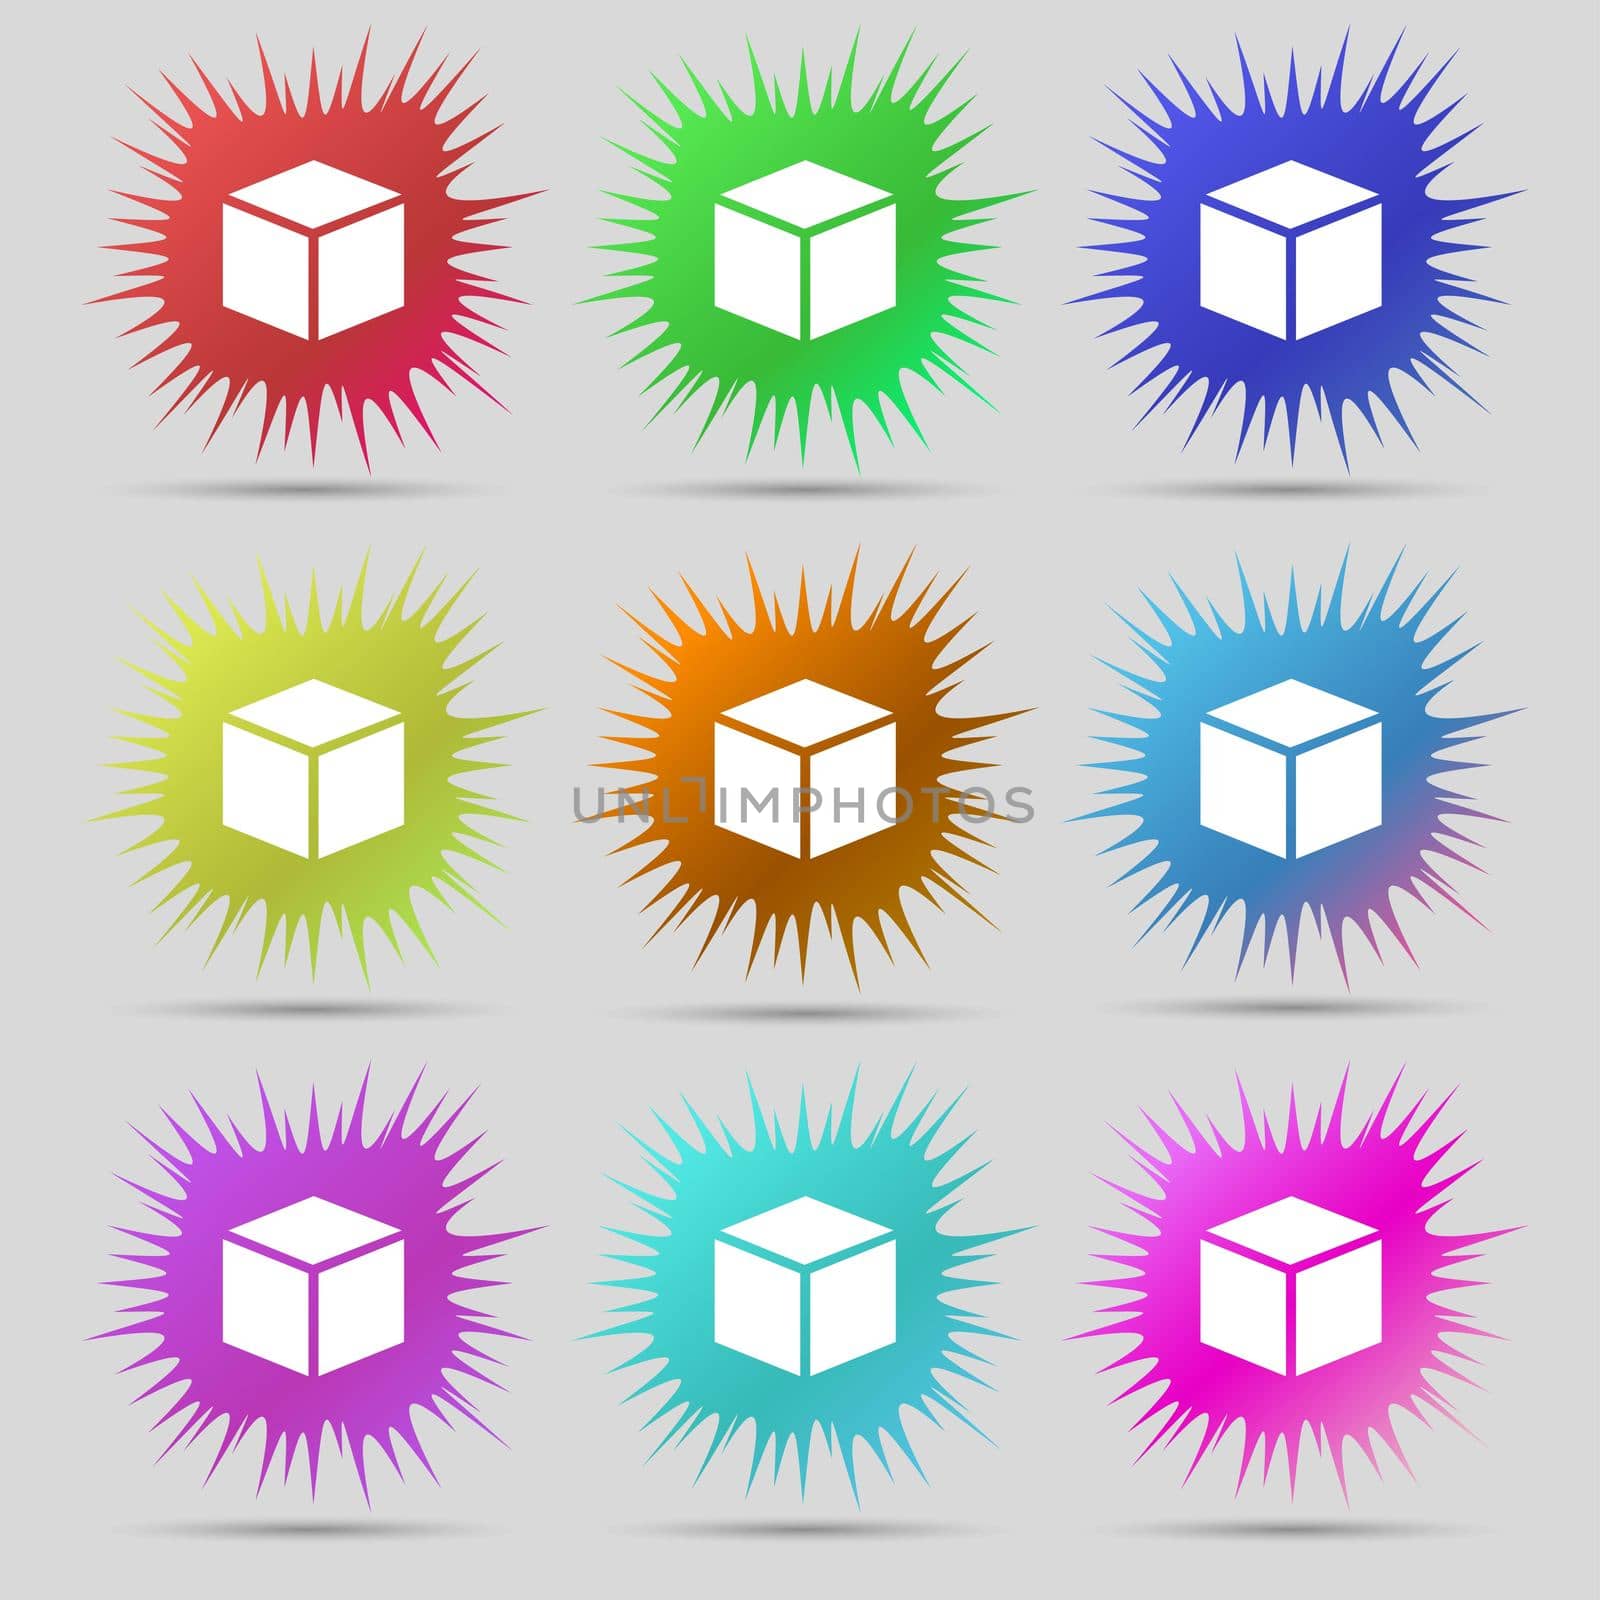 3d cube icon sign. Nine original needle buttons. illustration. Raster version